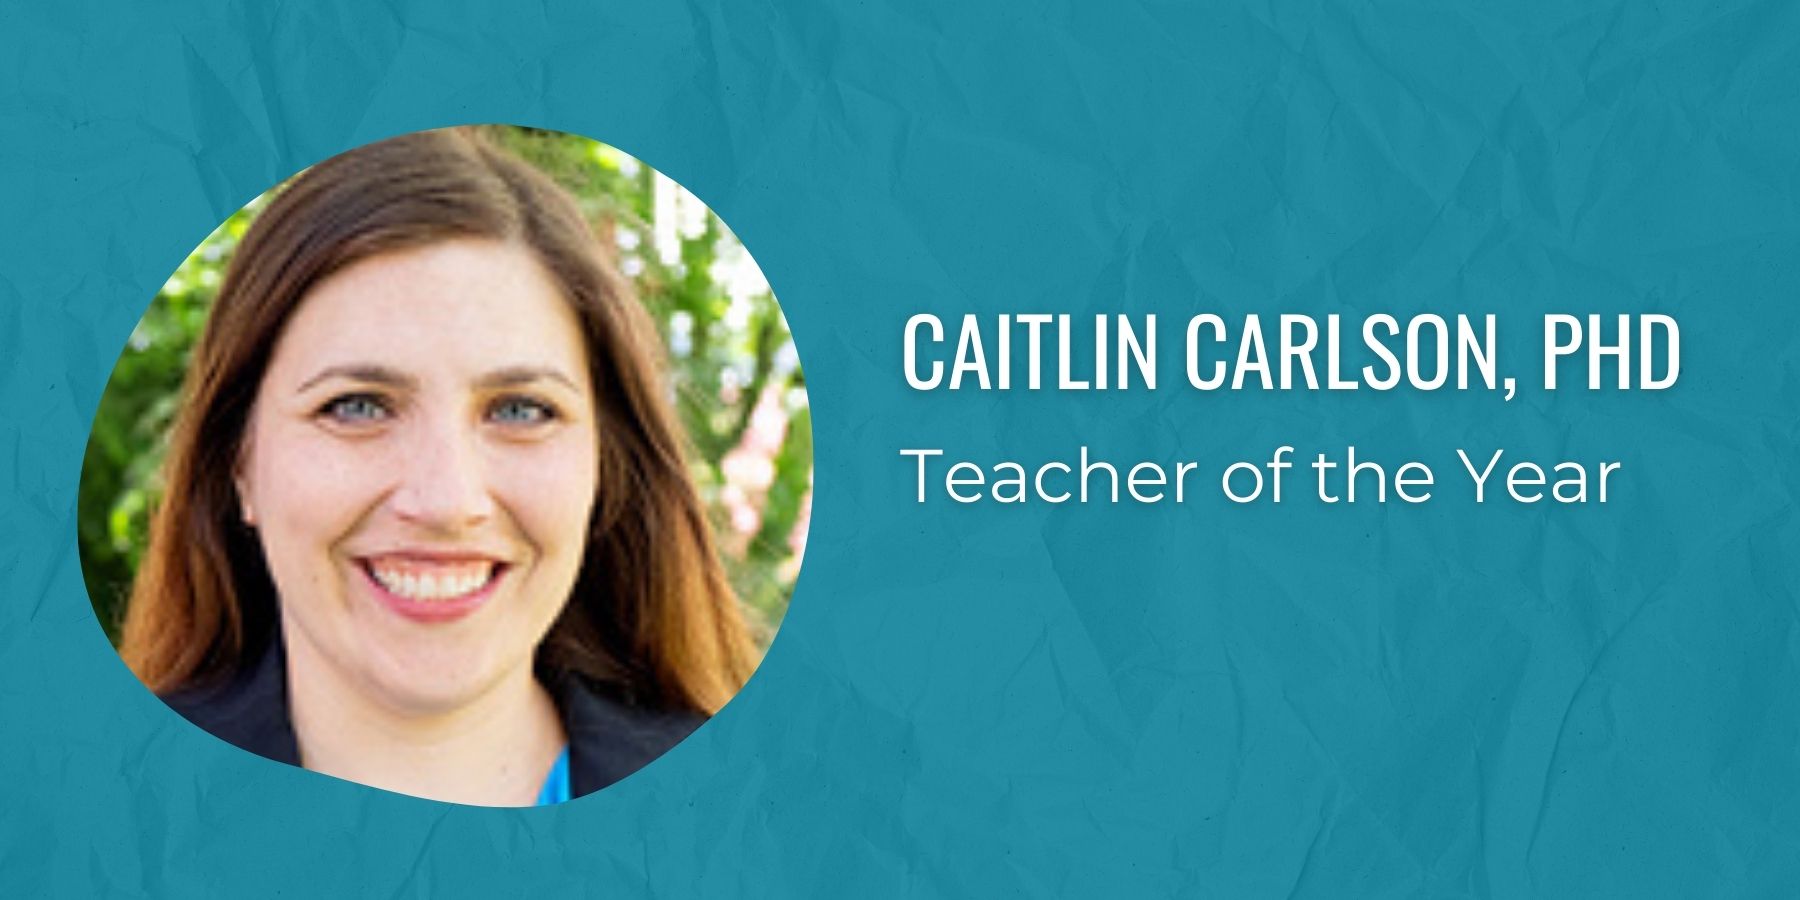 Photo of Caitlin Carlson and text Teacher of the Year